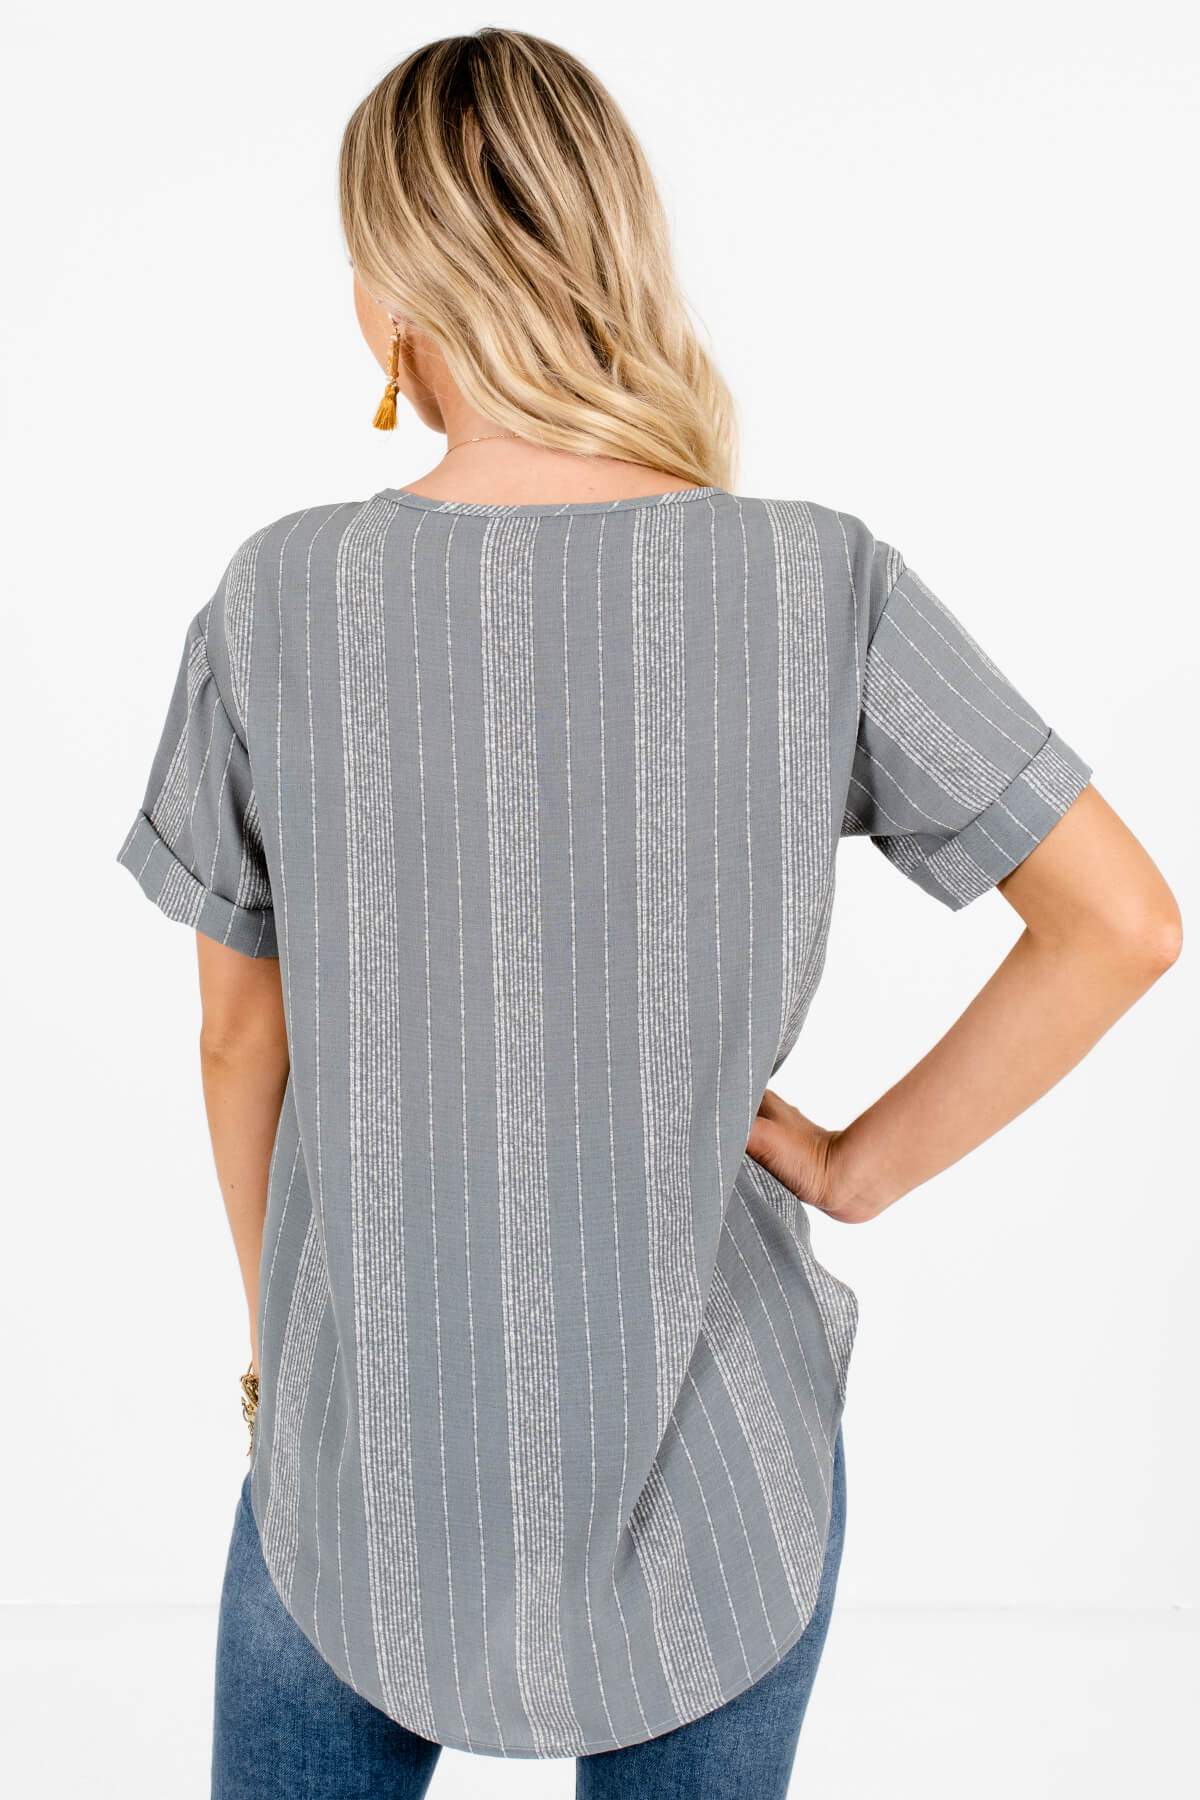 Women's Light Slate Blue Cuffed Sleeve Boutique Tops